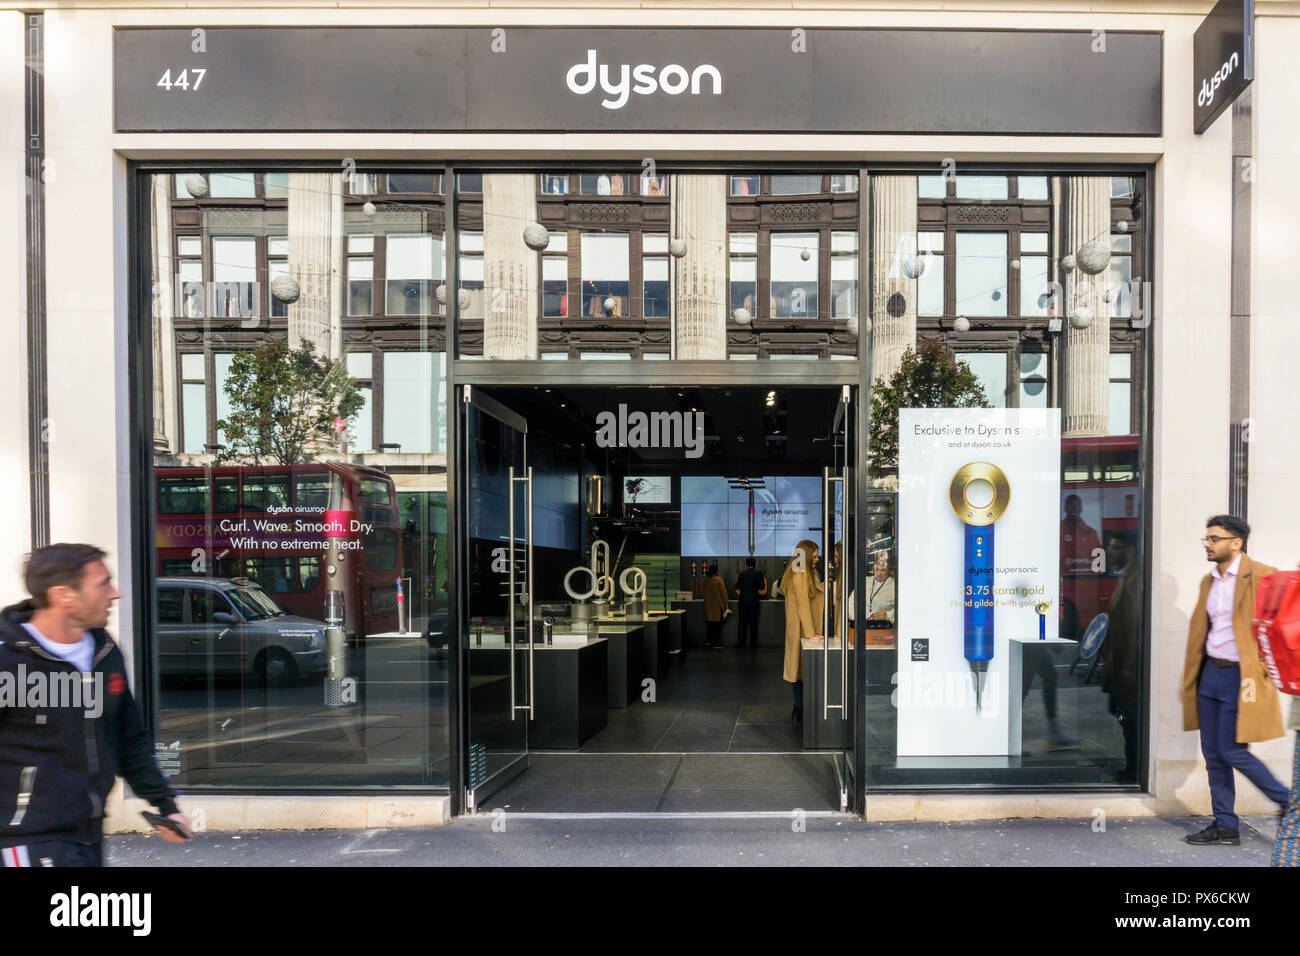 Dyson shop in Oxford Street, Londra Foto stock - Alamy